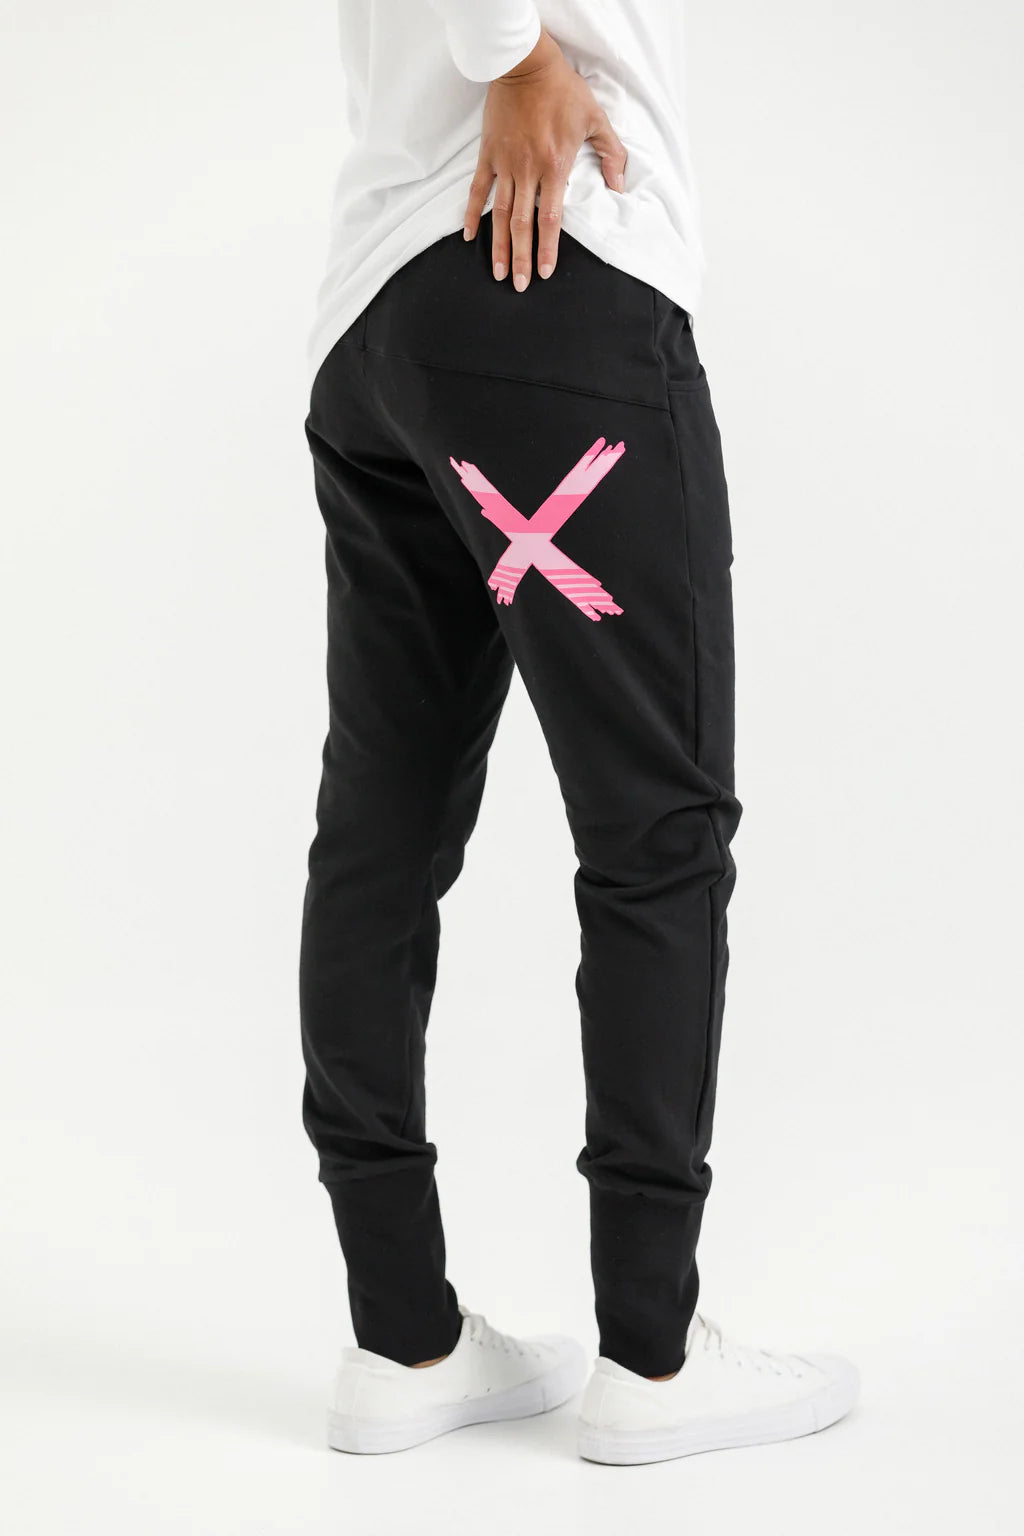 Homelee Apartment Pants Winter - Black with Irregular Pink Stripe X